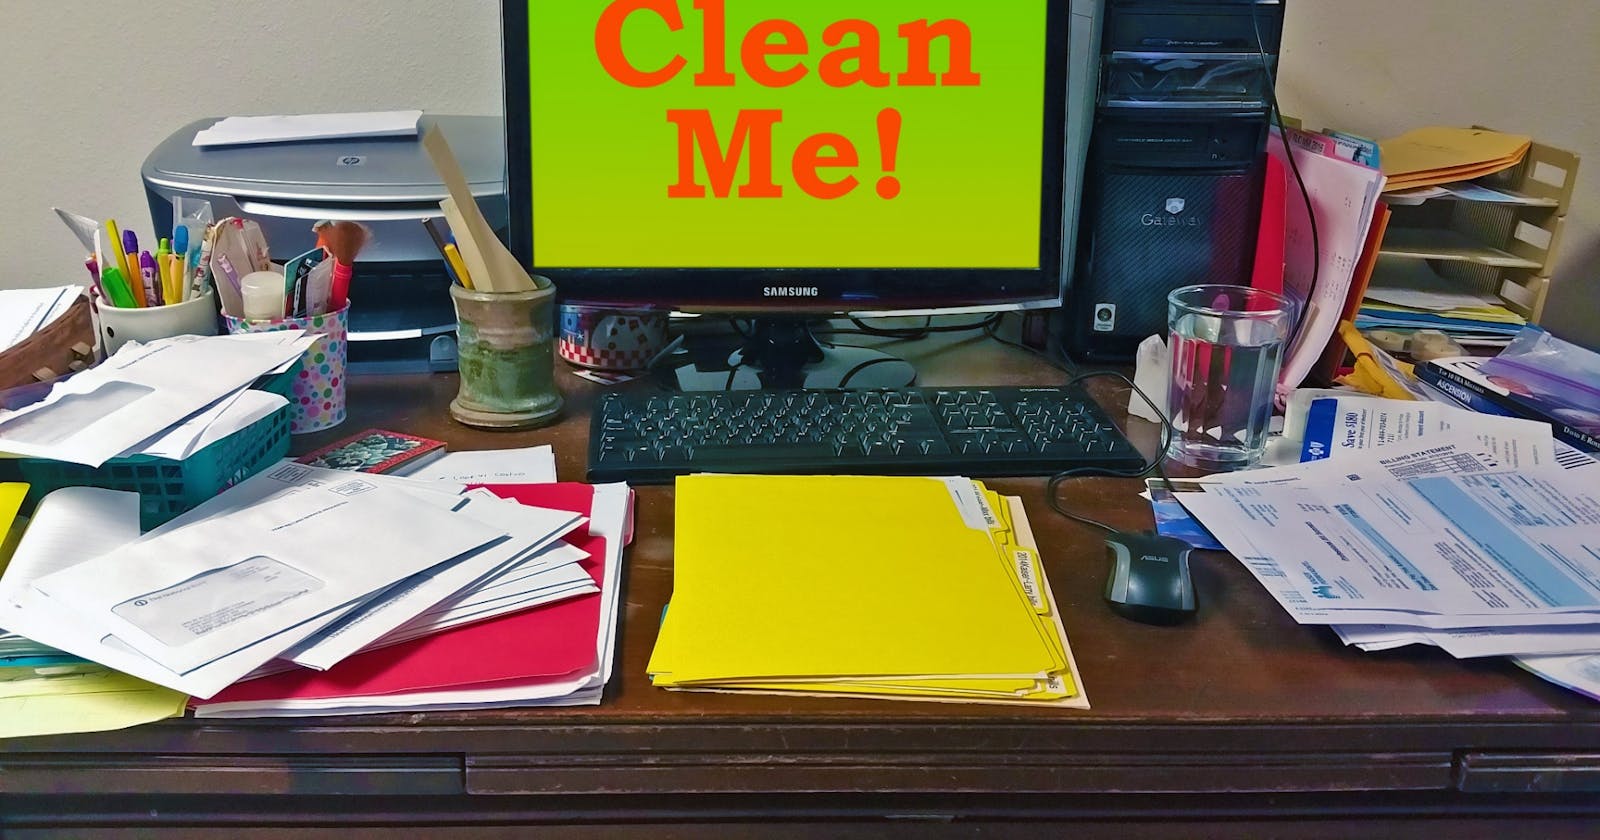 Clean code is like a clean desk